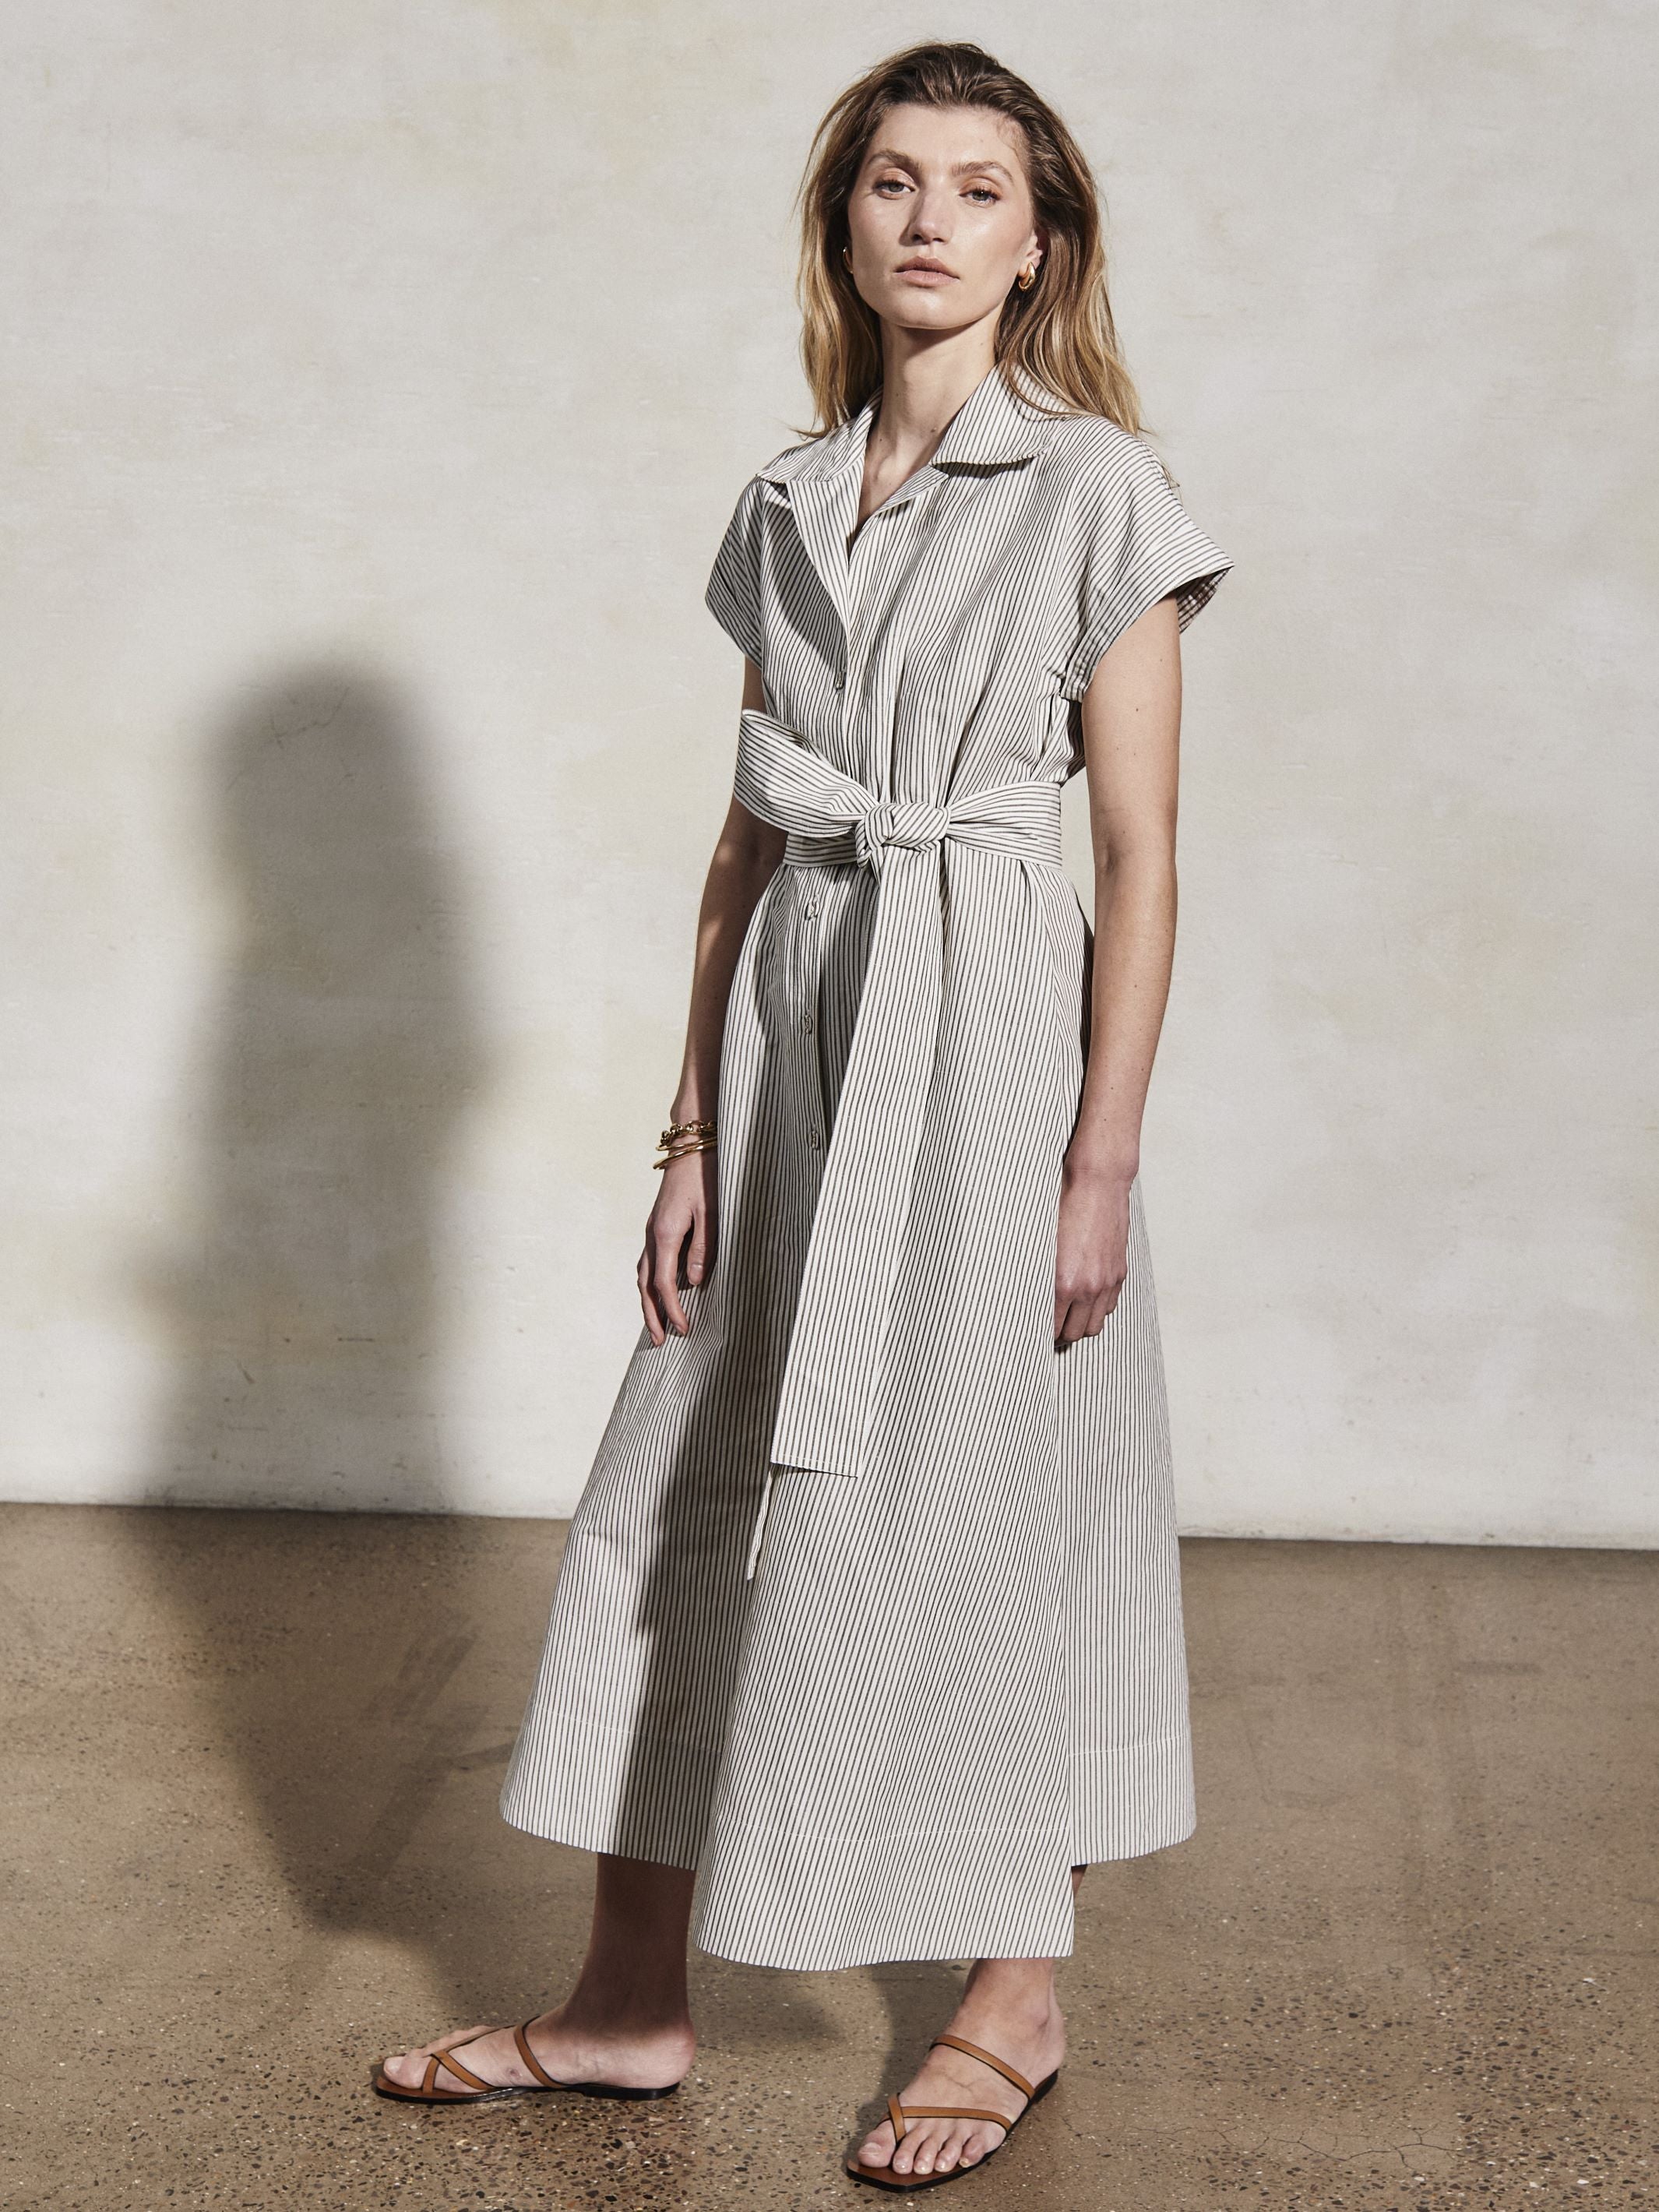 LUCY - White & Moss Linen Weave Dress - Mondo Corsini